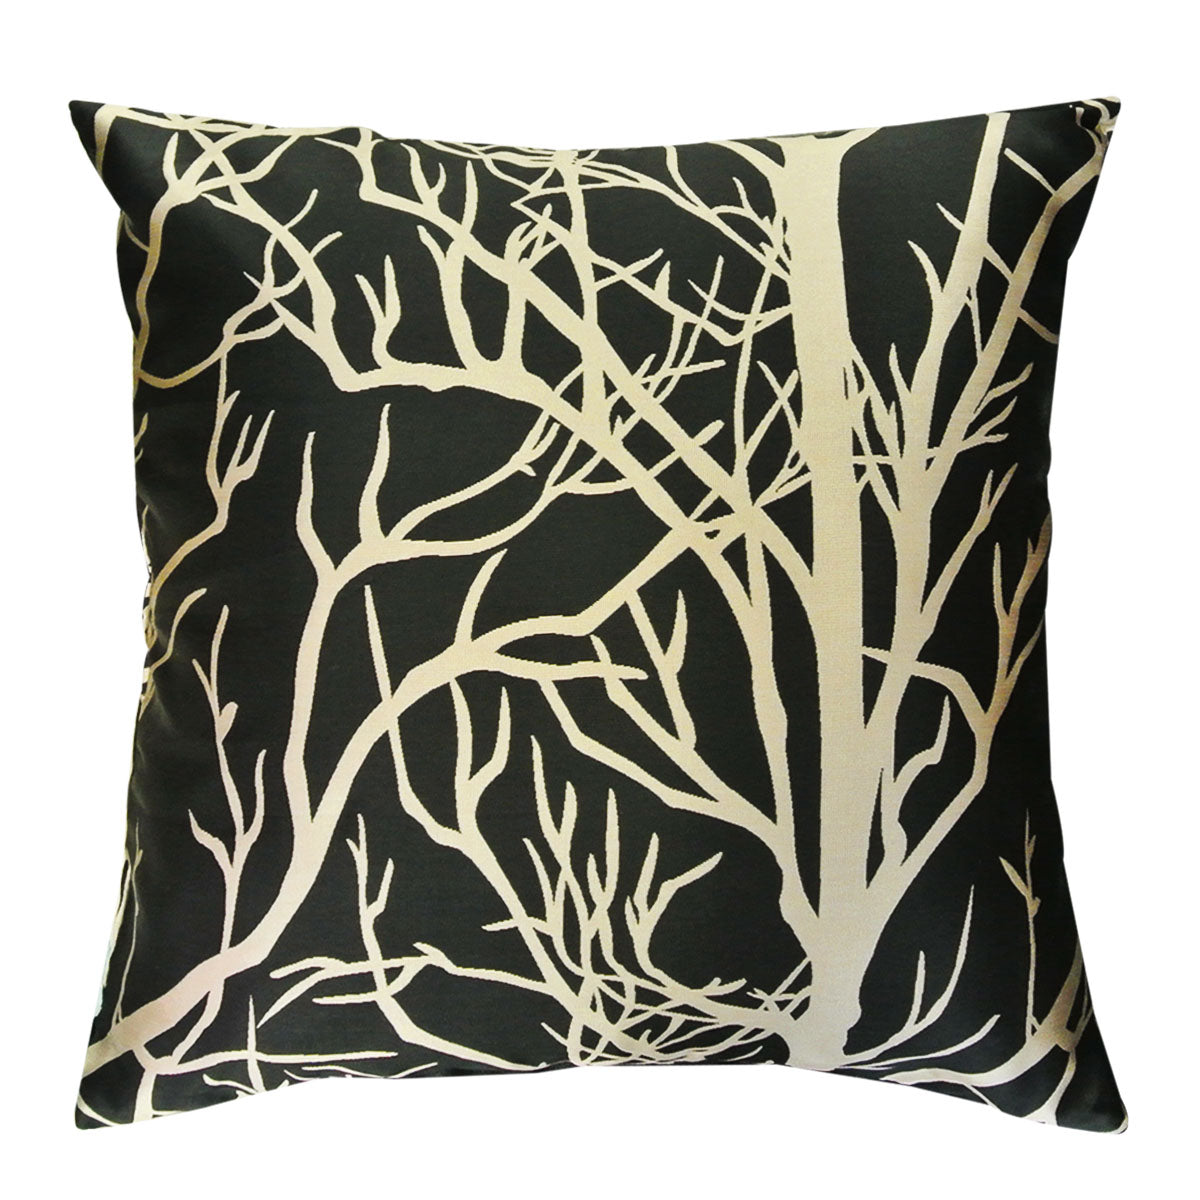 Kella Milla Contemporary Woodlands Throw Pillow Cover